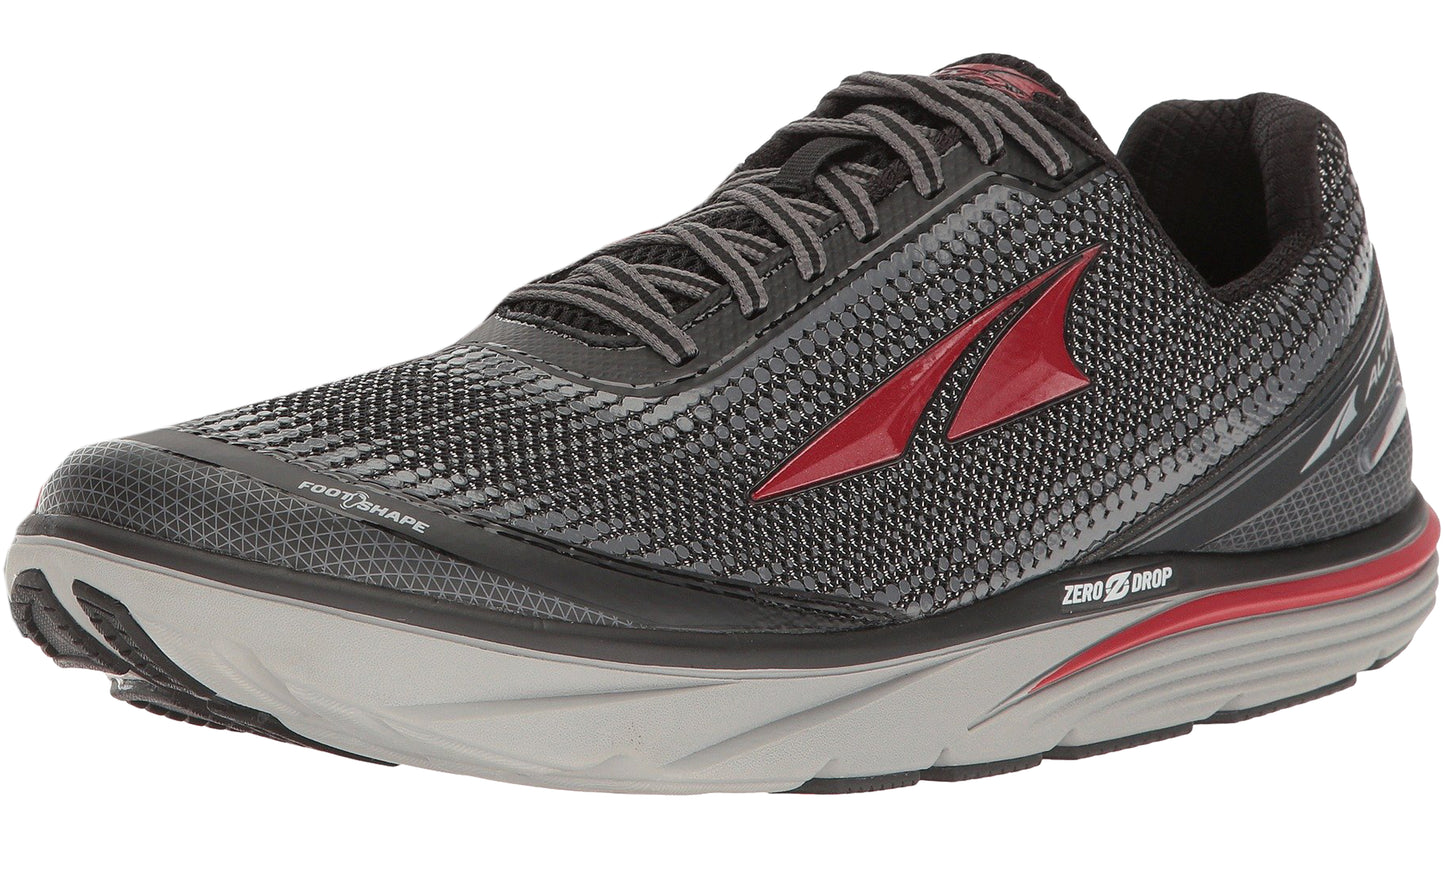 Lateral of Black/Red Altra Men's Running Lightweight Platform Flexible Shoes Torin 3.0